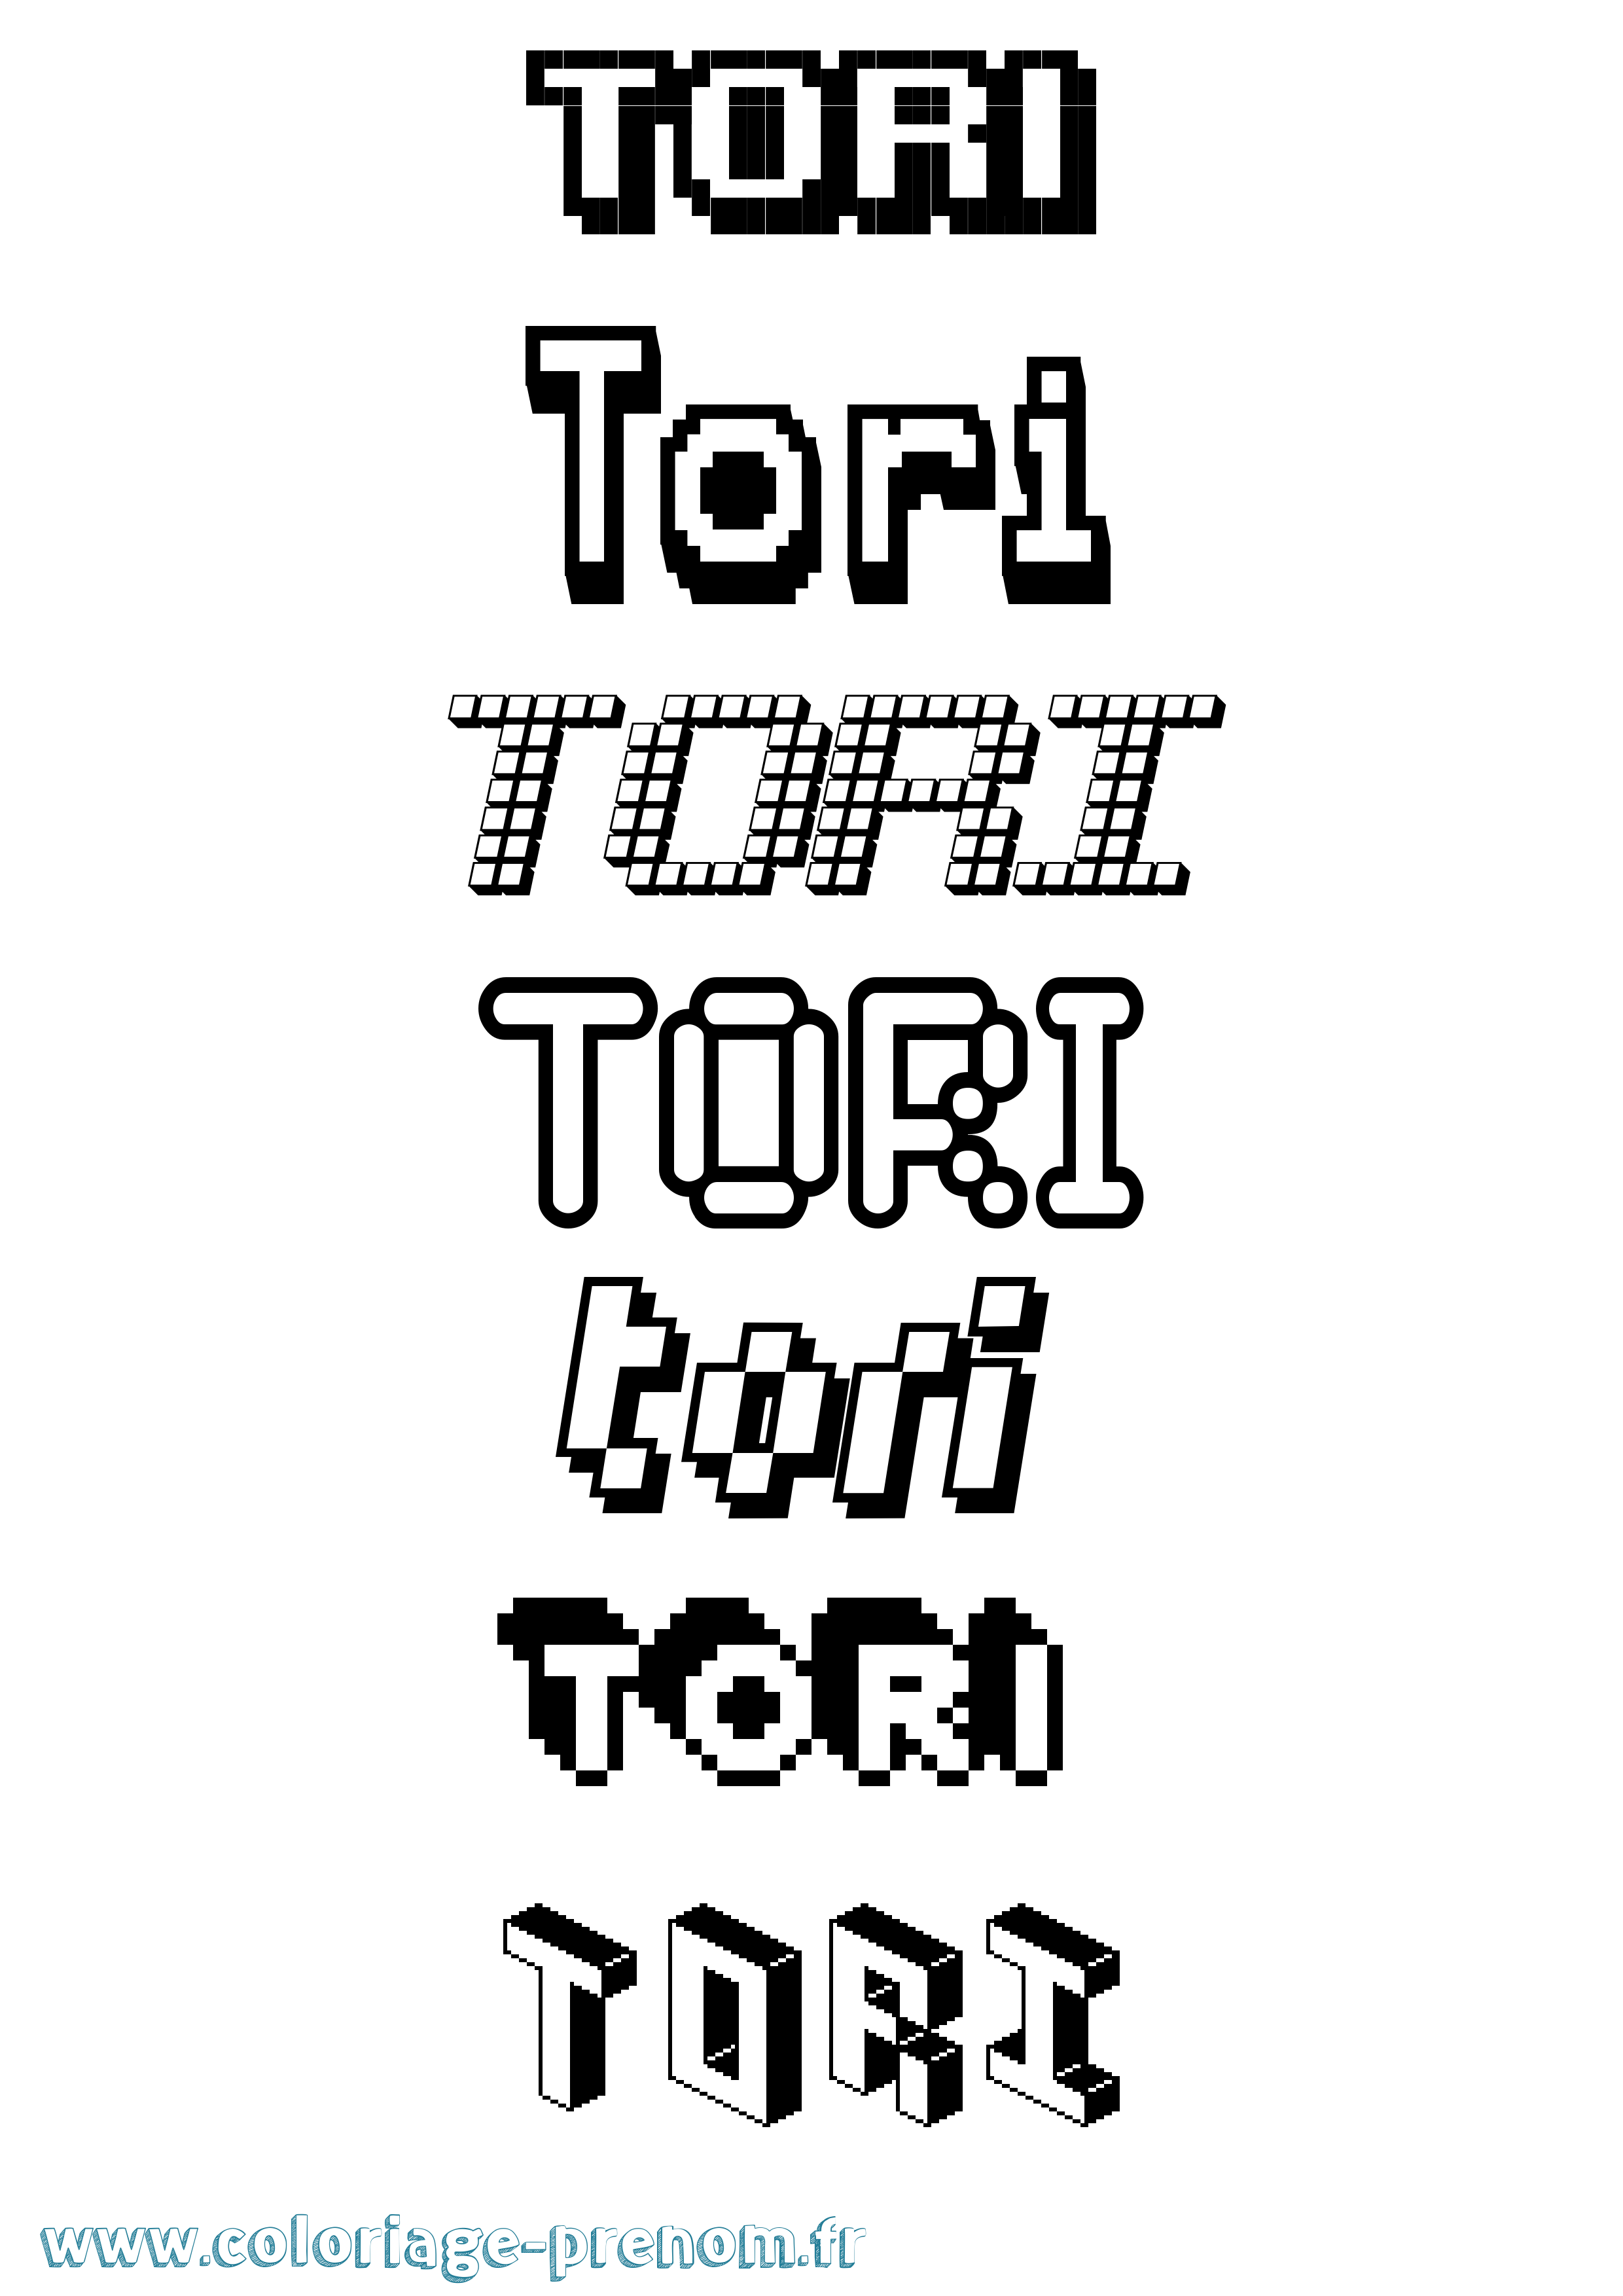 Coloriage prénom Tori Pixel